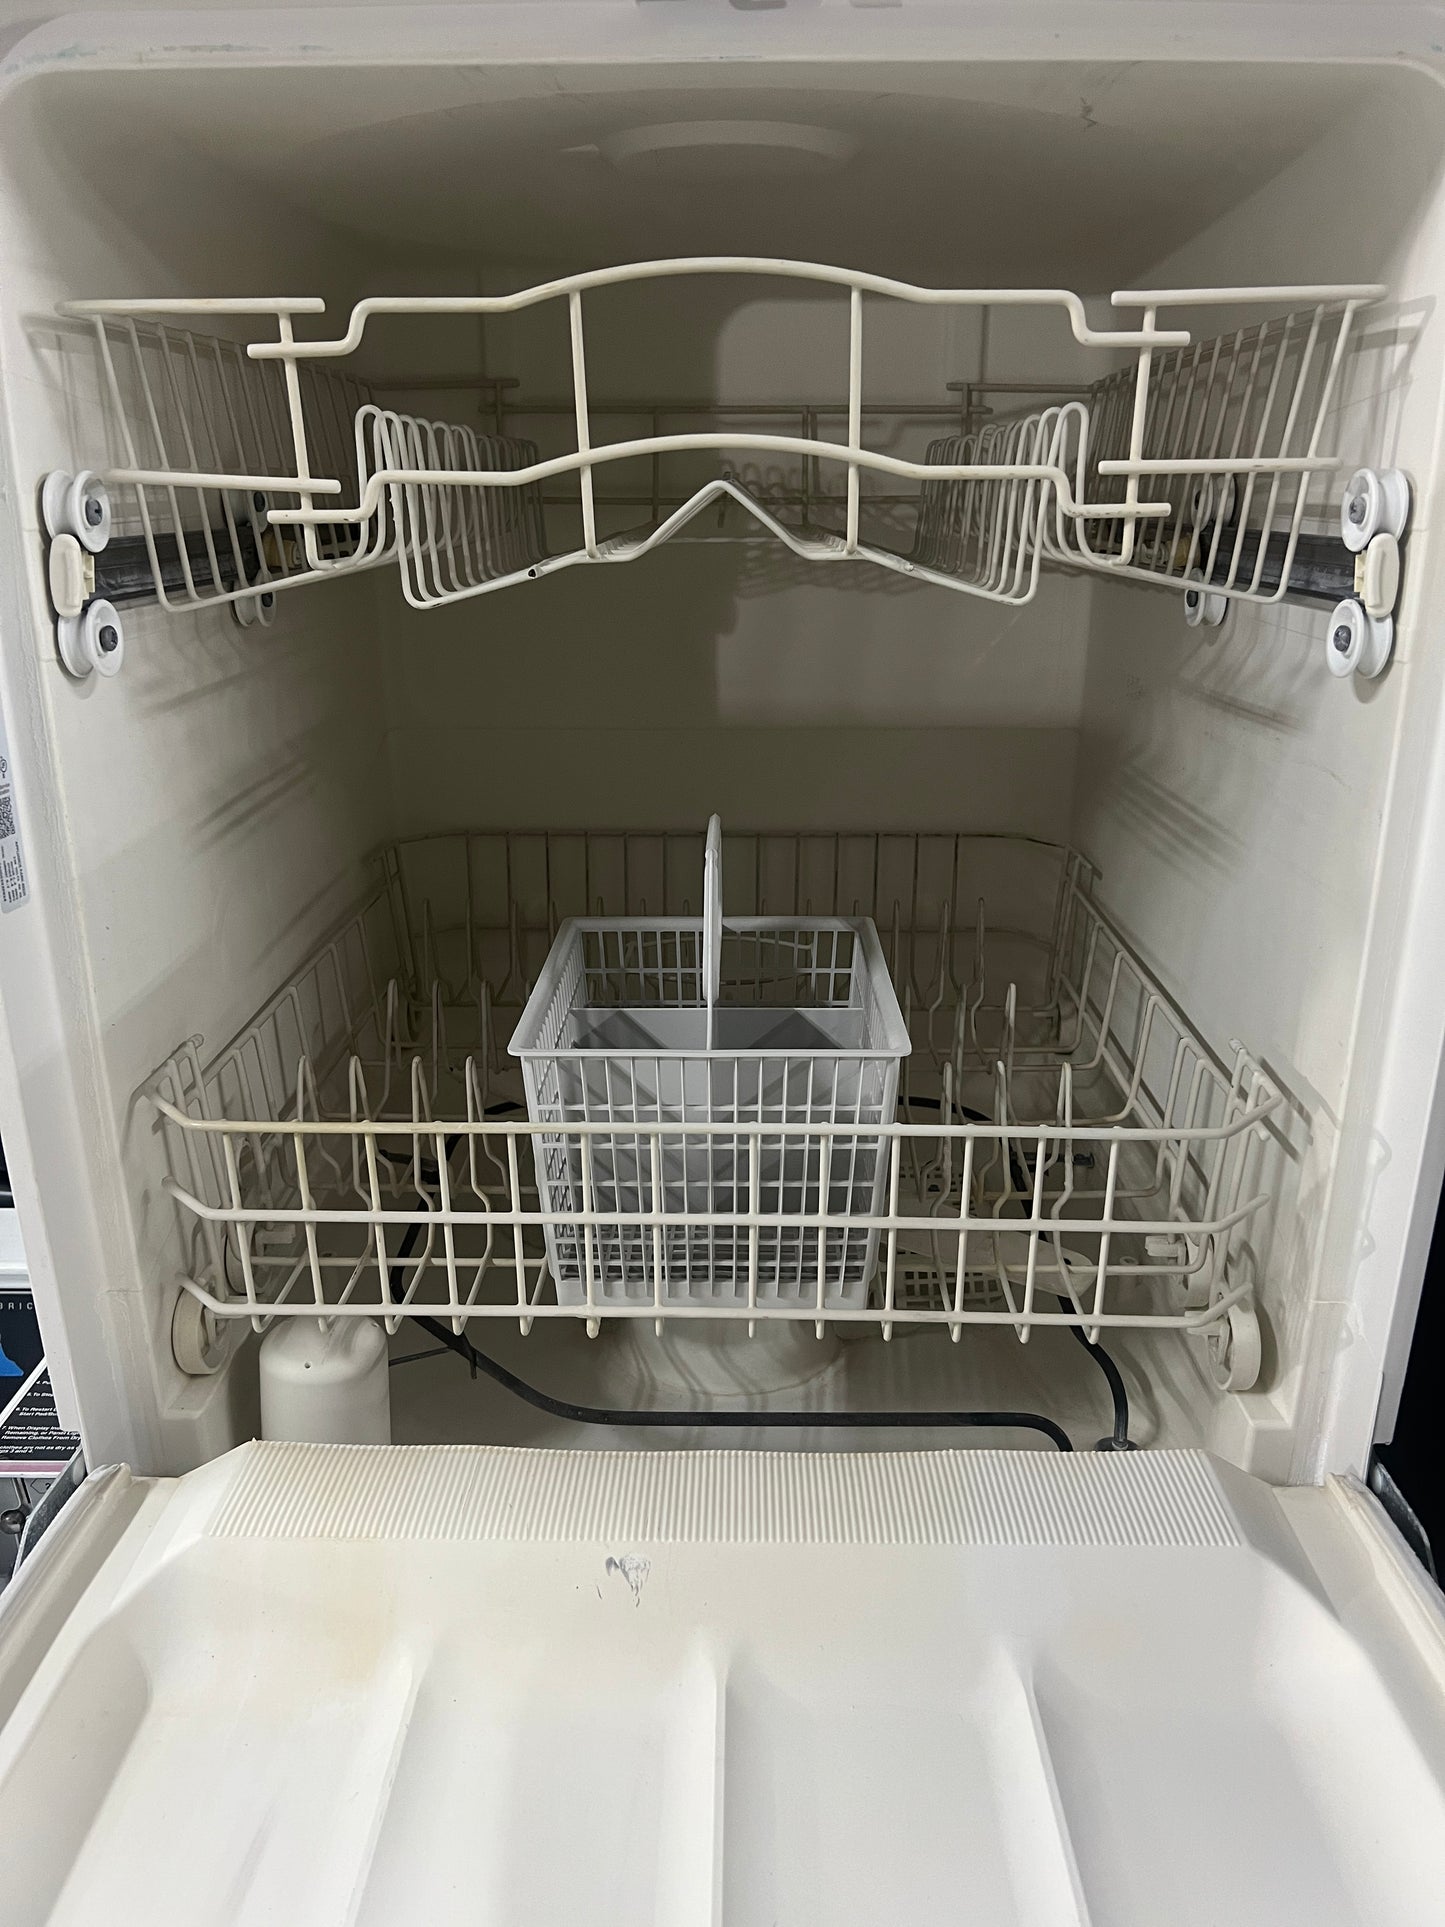 24" GE Dishwasher in White Used & Working 999206